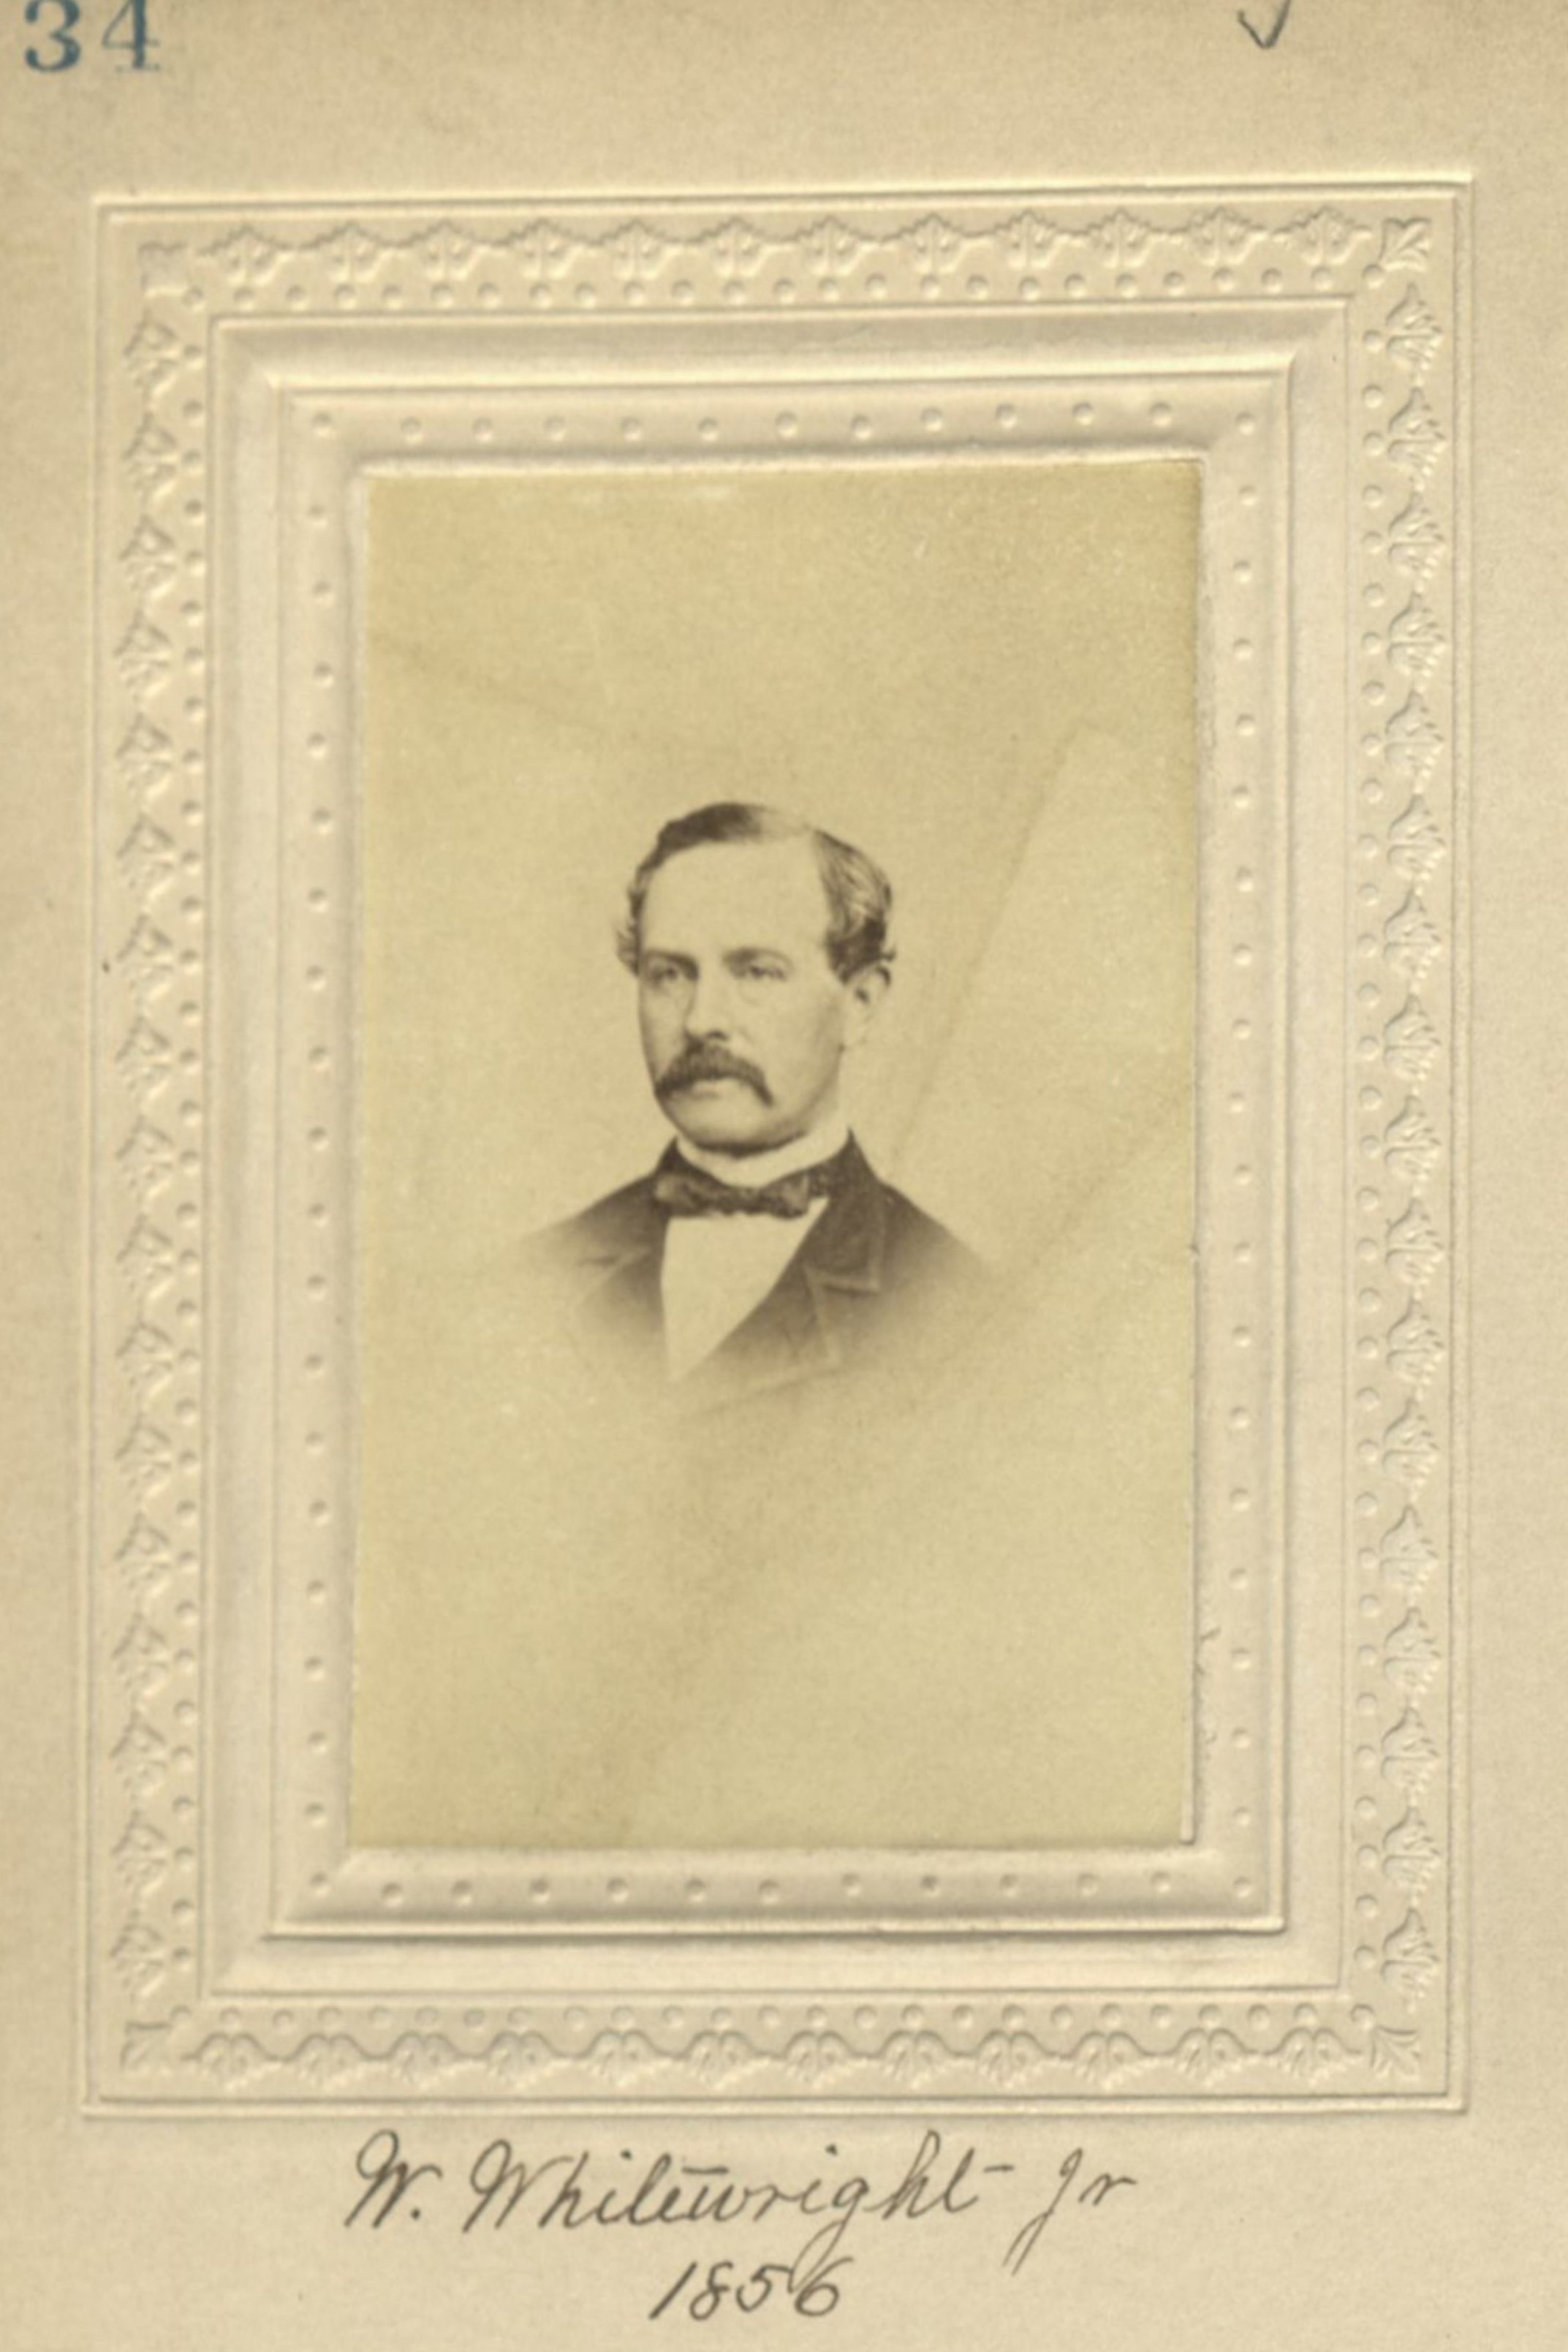 Member portrait of William Whitewright Jr.